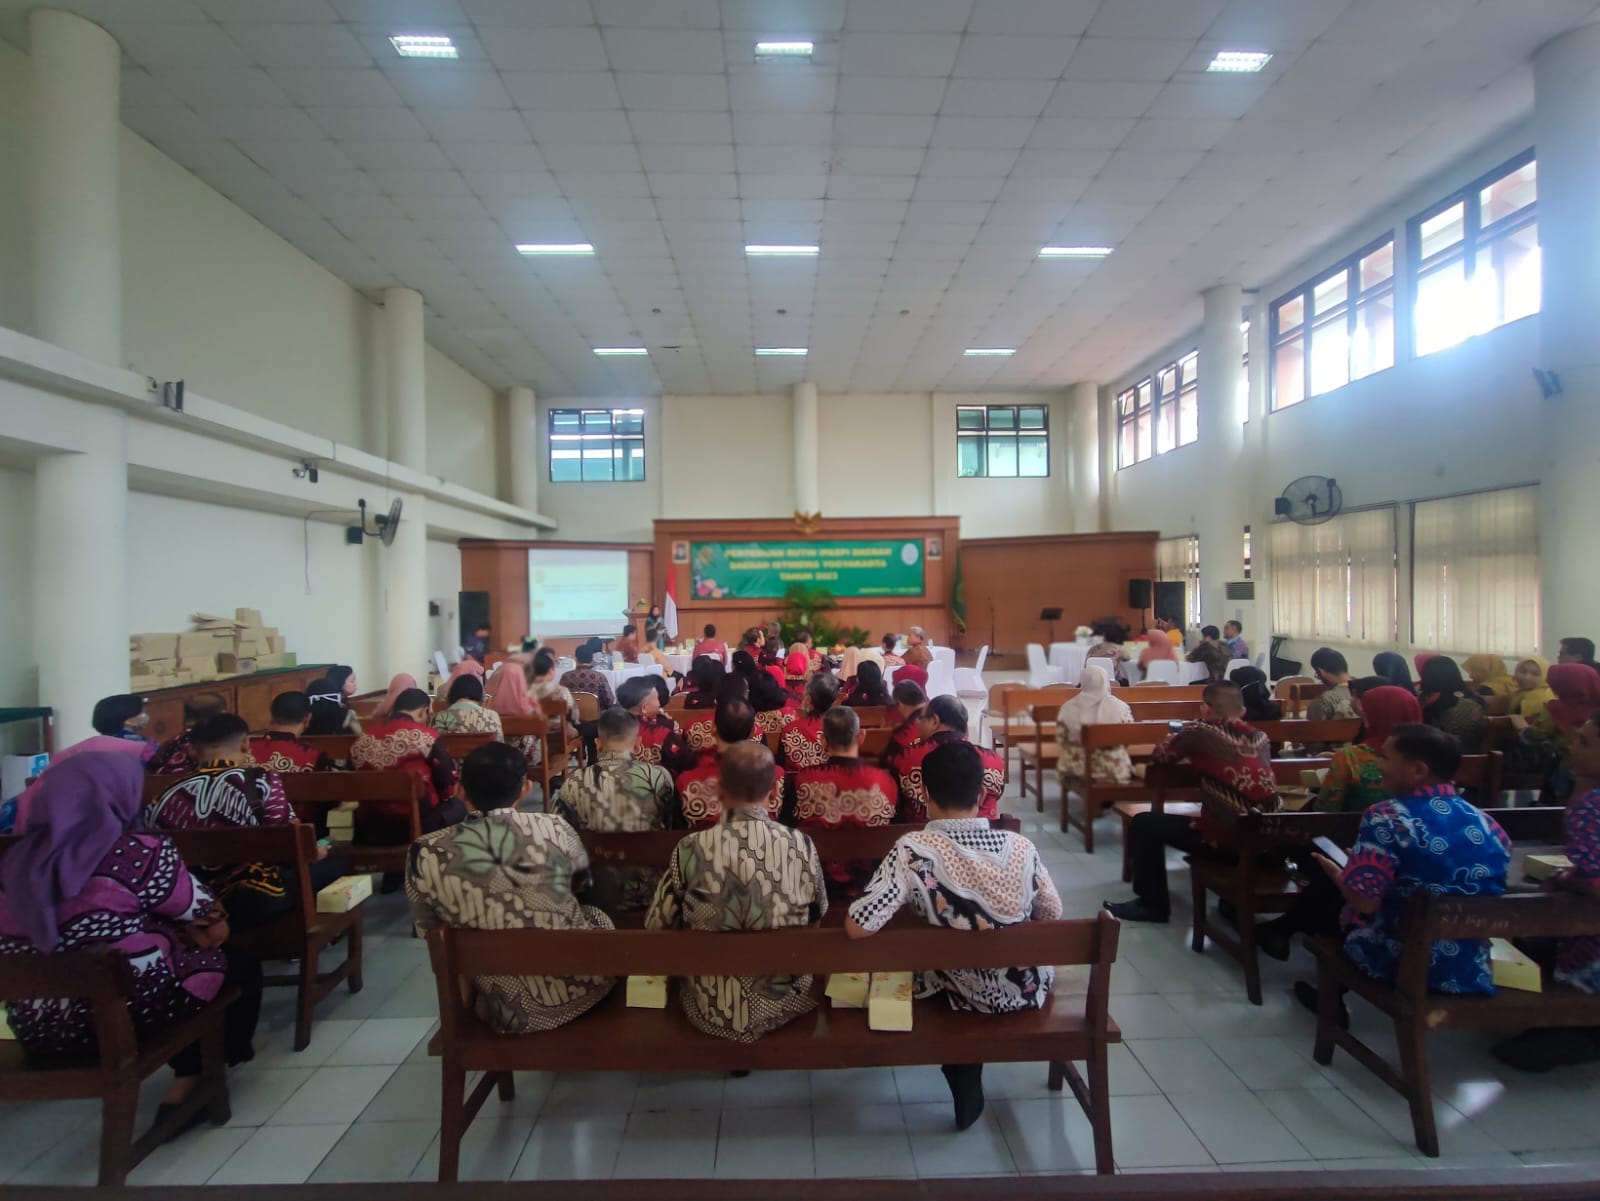 Pengadilan Negeri Yogyakarta Menjadi Tuan Rumah Pertemuan Rutin IPASPI Daerah se-DIY Tahun 2023